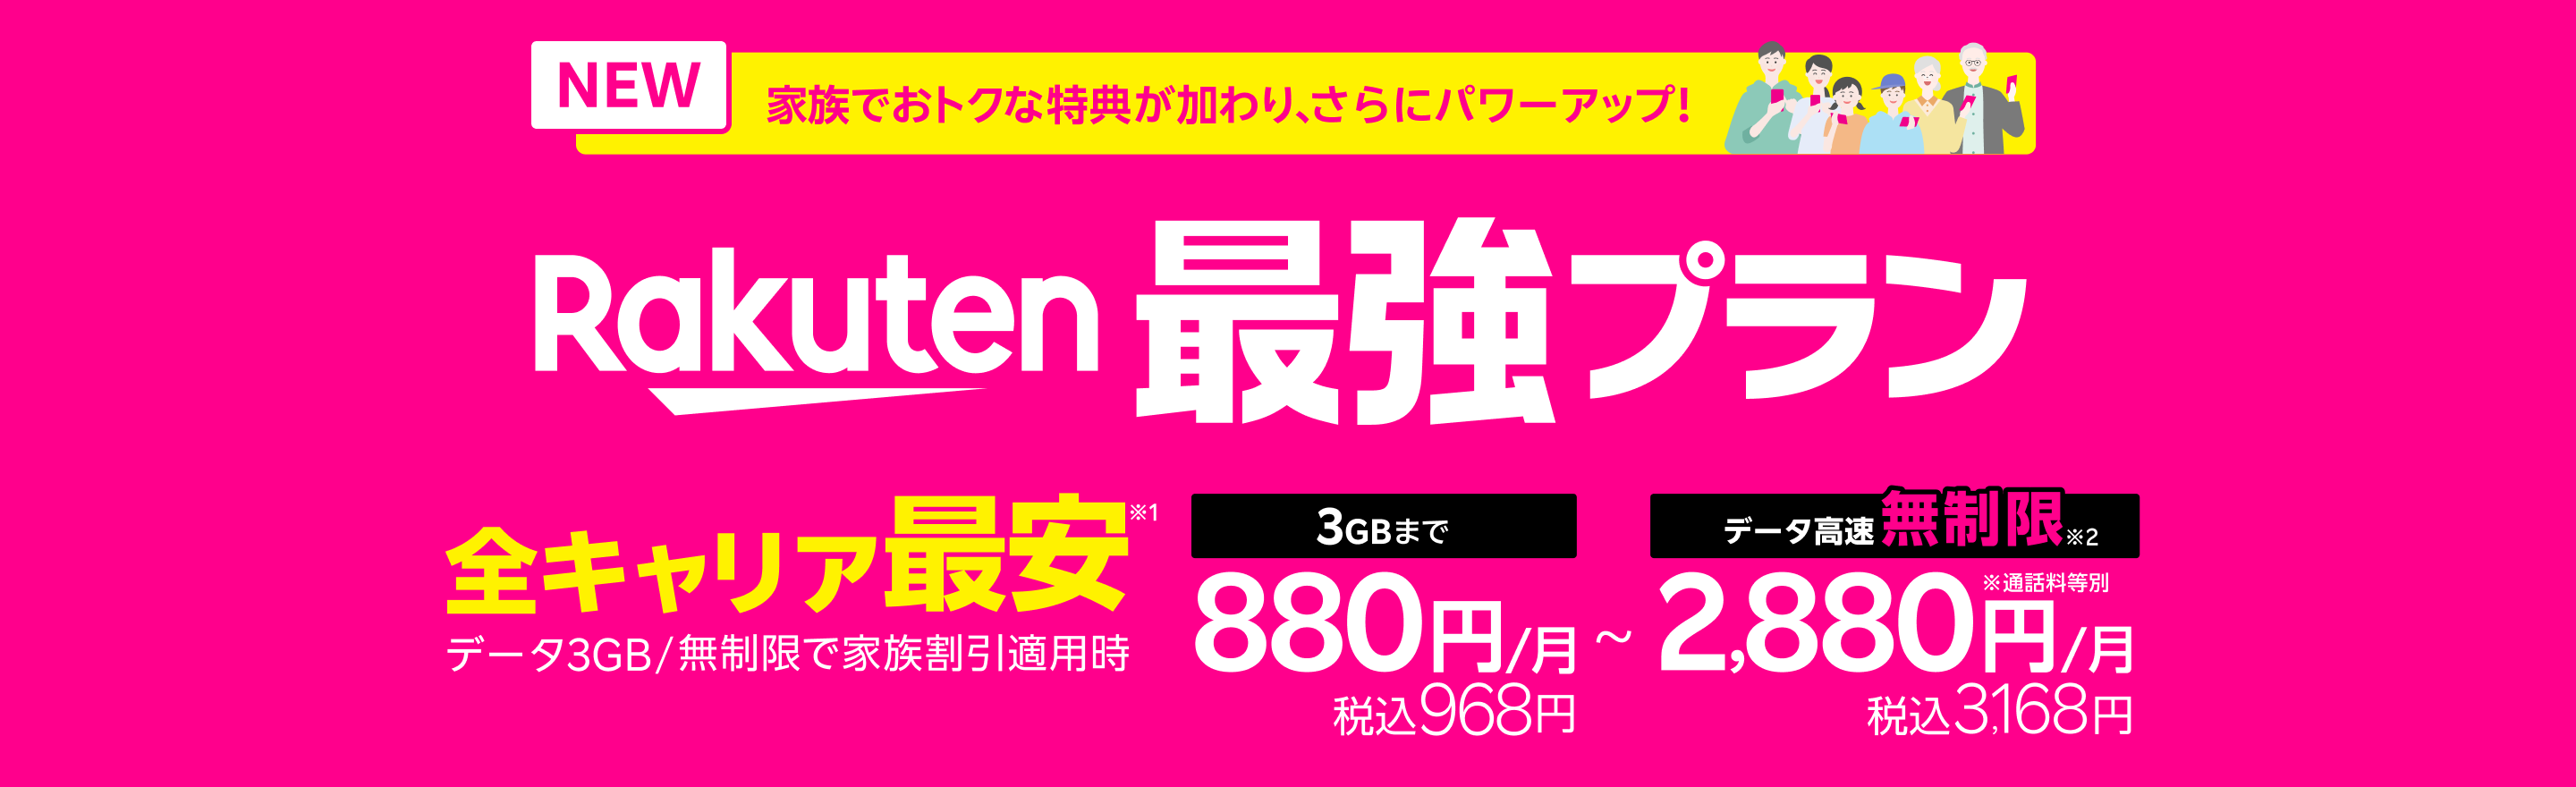 「Rakuten最強プラン」は家族でおトクな特典が加わり、さらにパワーアップ！データ3GB/無制限で家族割引適用時、全キャリアで最安！※1 3GBまで880円/月（税込968円）、データ高速無制限※2 なら2,880円/月（税込3,168円）